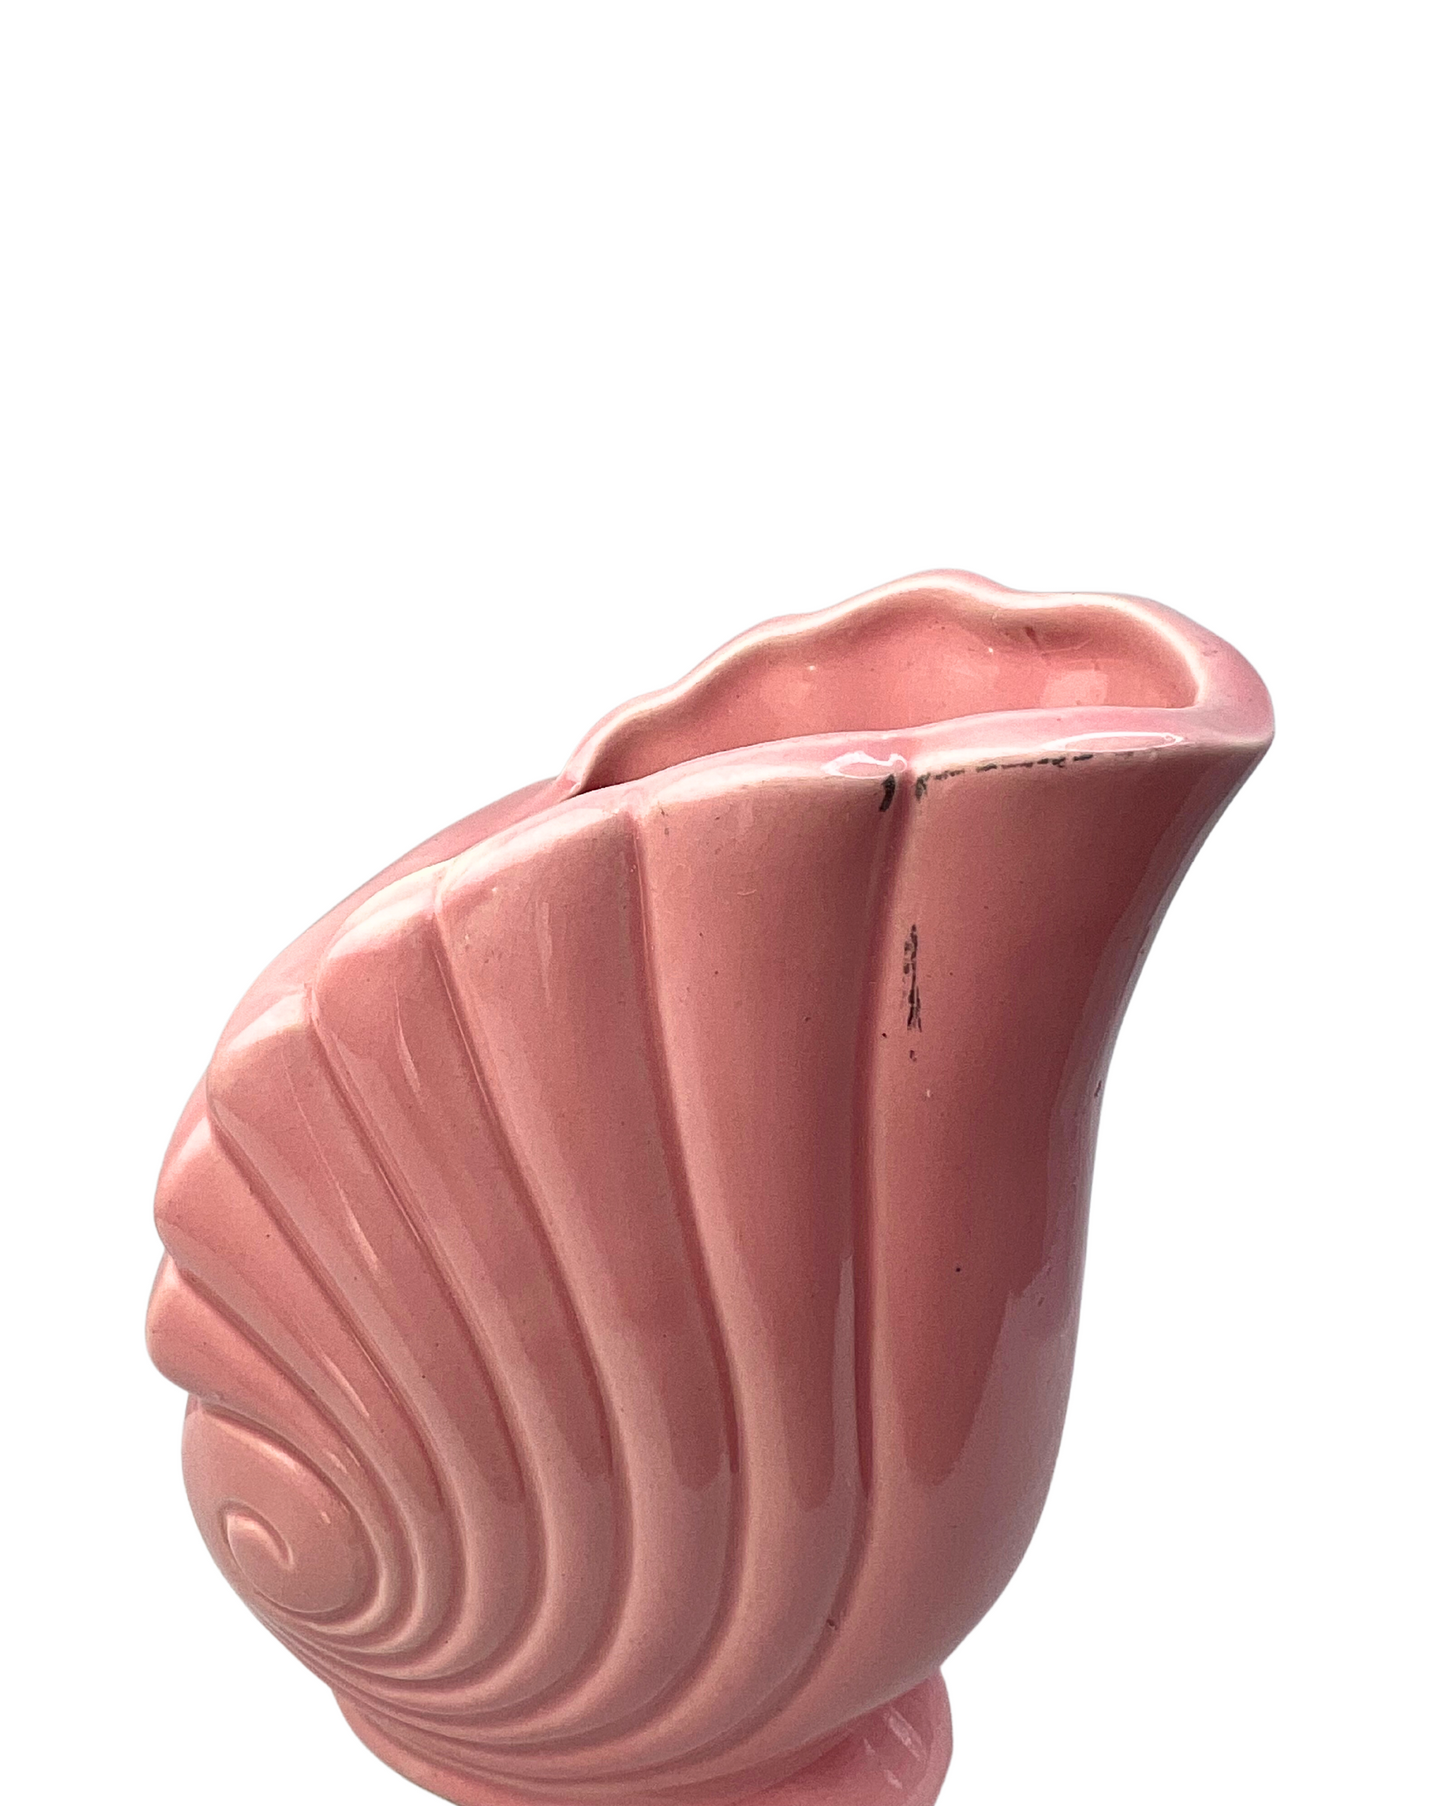 80’s Pink Seashell Vase Planter